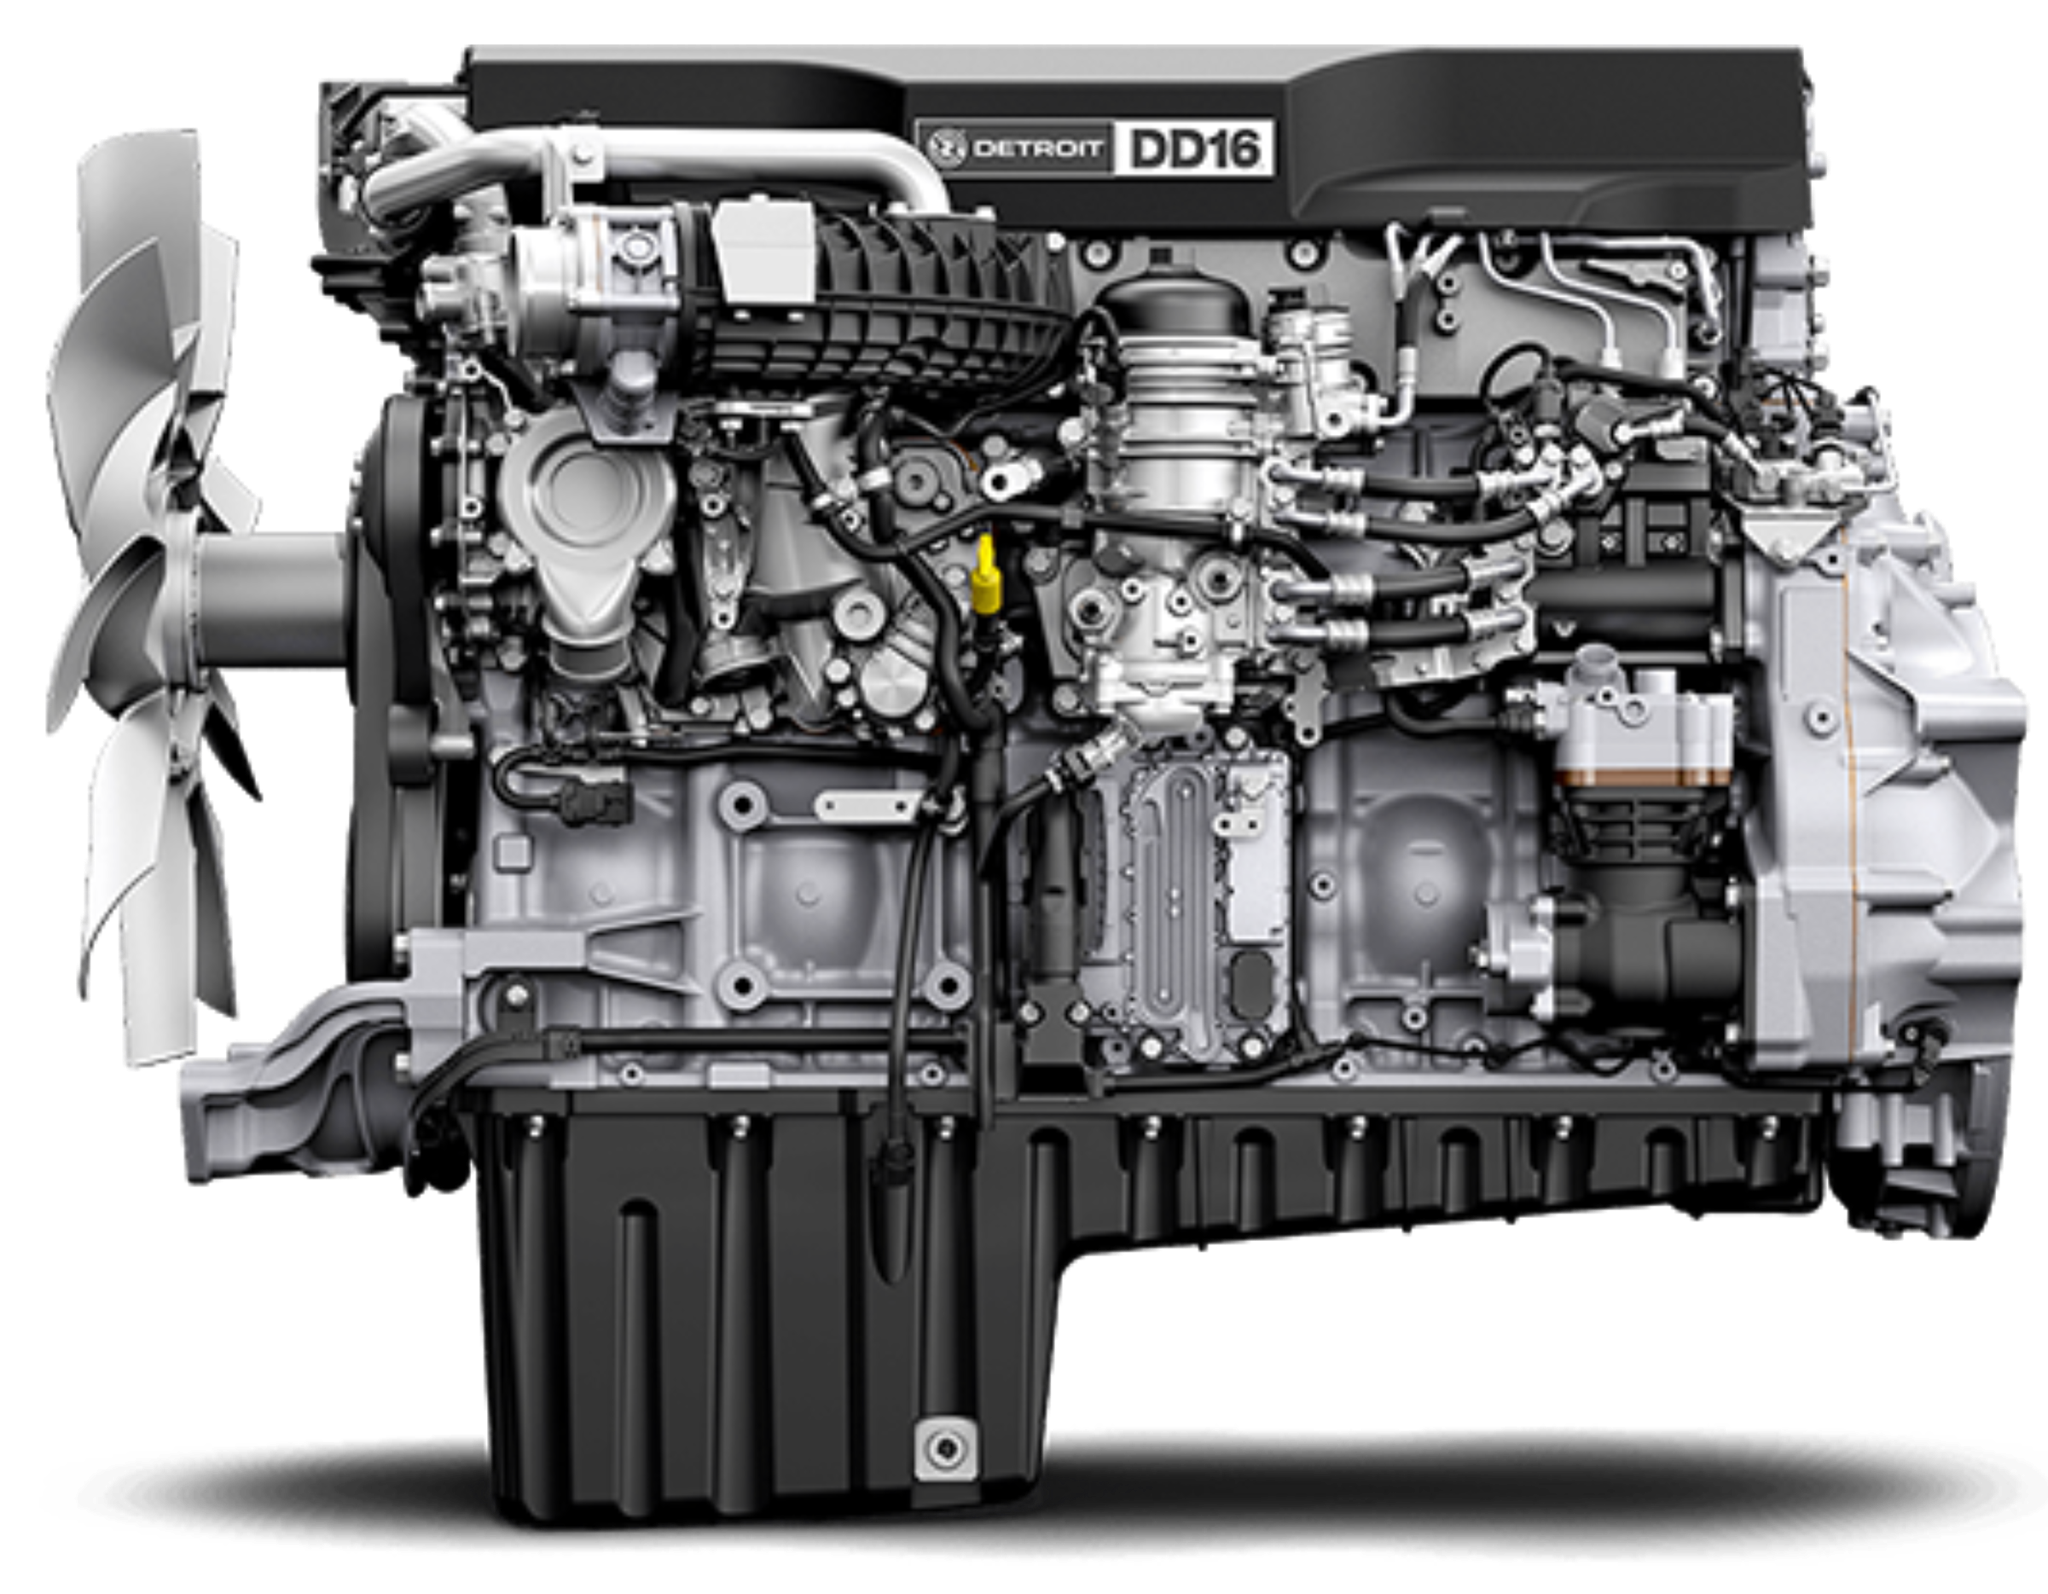 Дд 15. Detroit Diesel dd15. Двигатель dd16 Детройт. 6.2 Detroit Diesel v8. Двигатель Детройт 15.